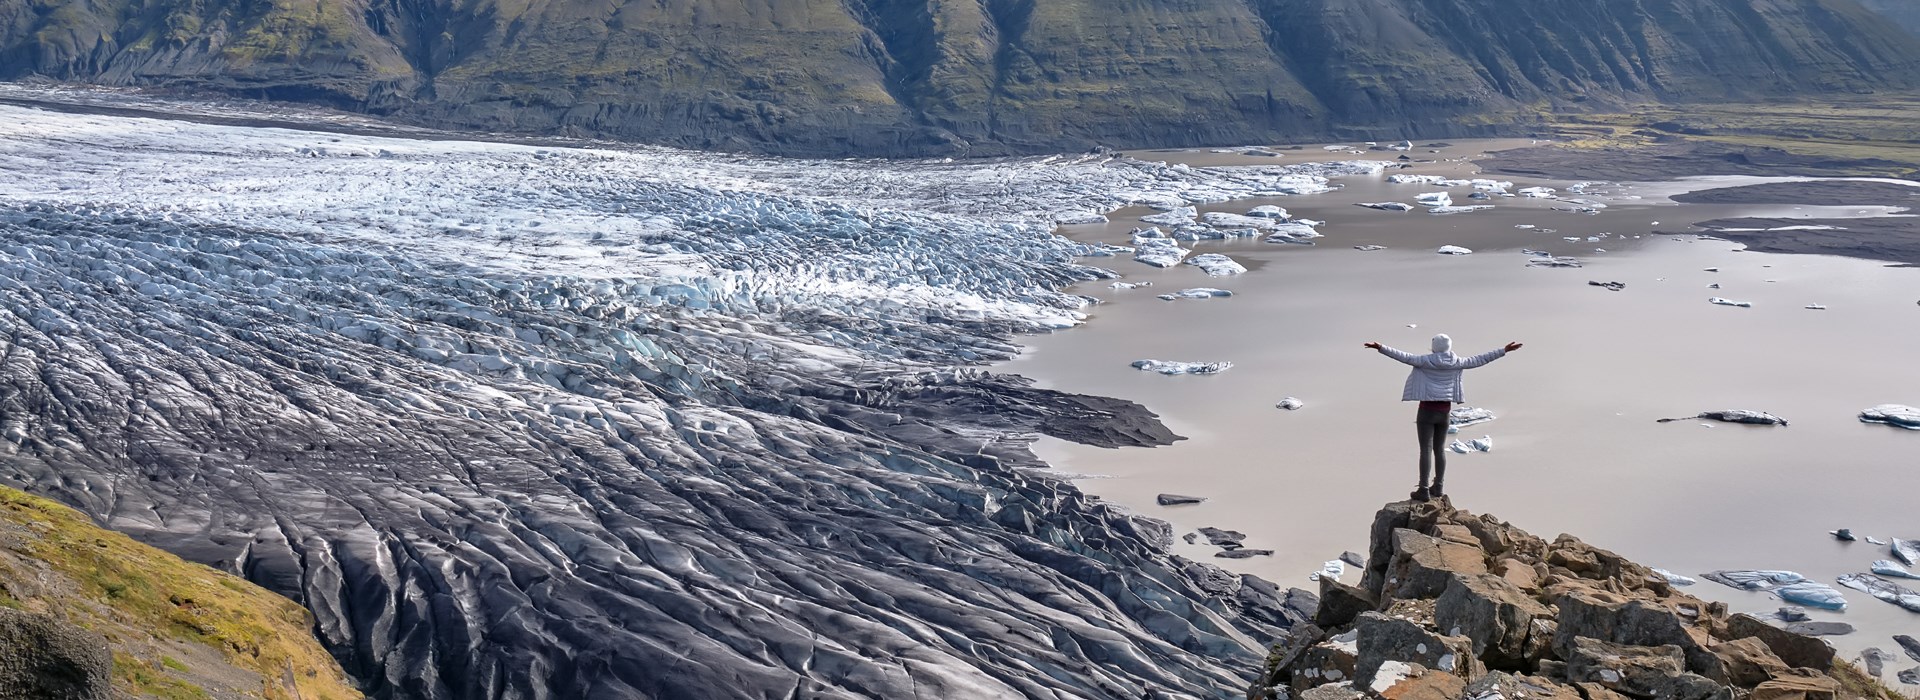 Visiter Le Parc National de Vatnajökull - Islande